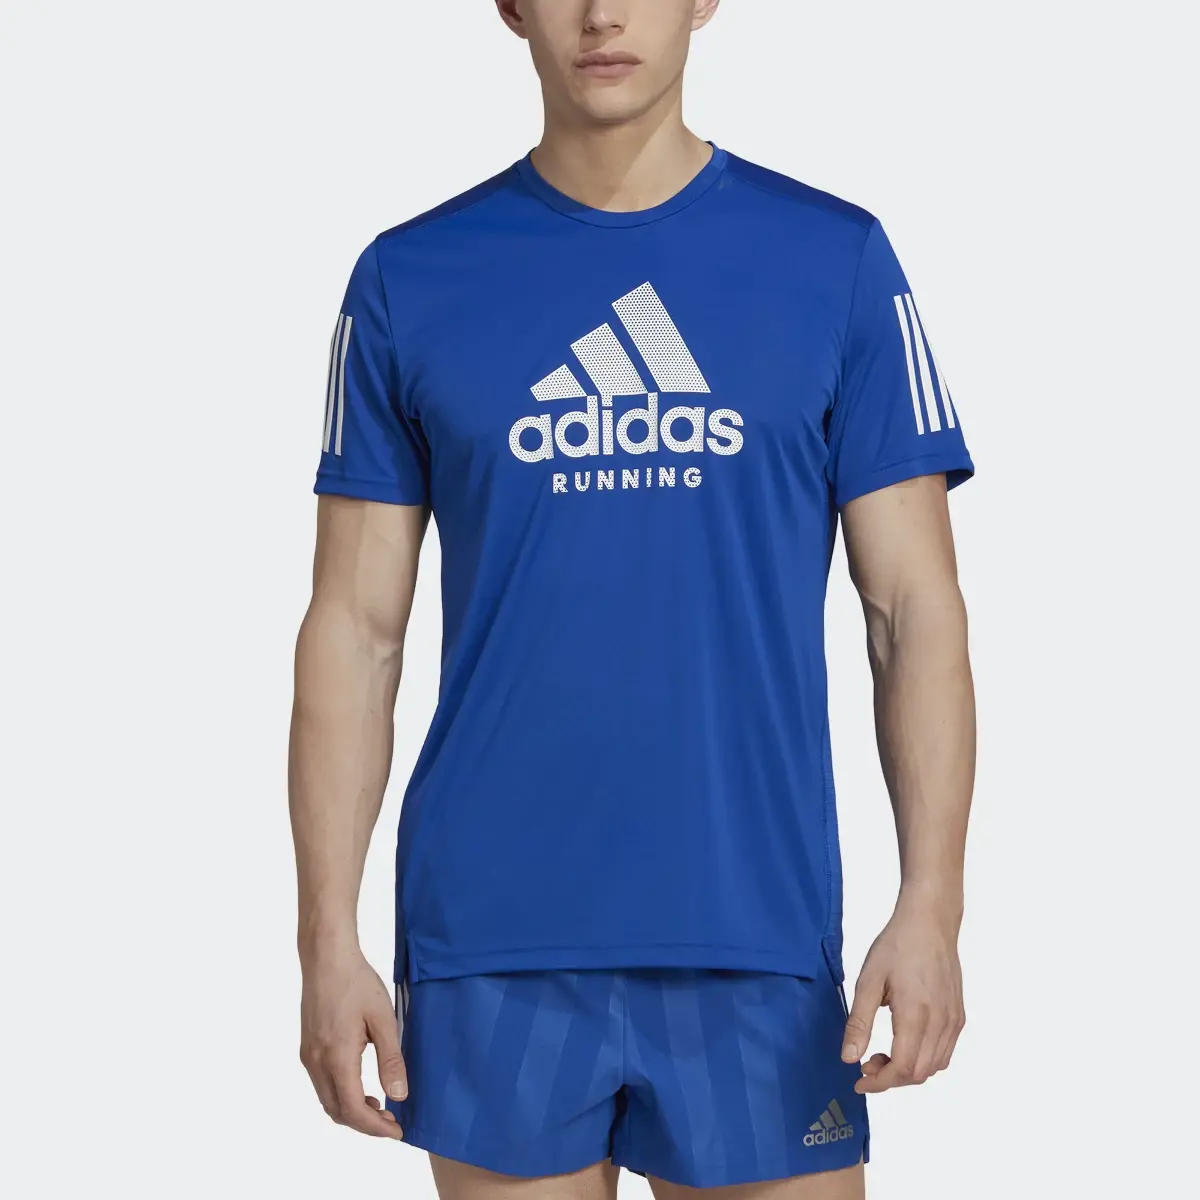 Adidas Own the Run AEROREADY Graphics In-Line Running Short Sleeve T-Shirt. 1